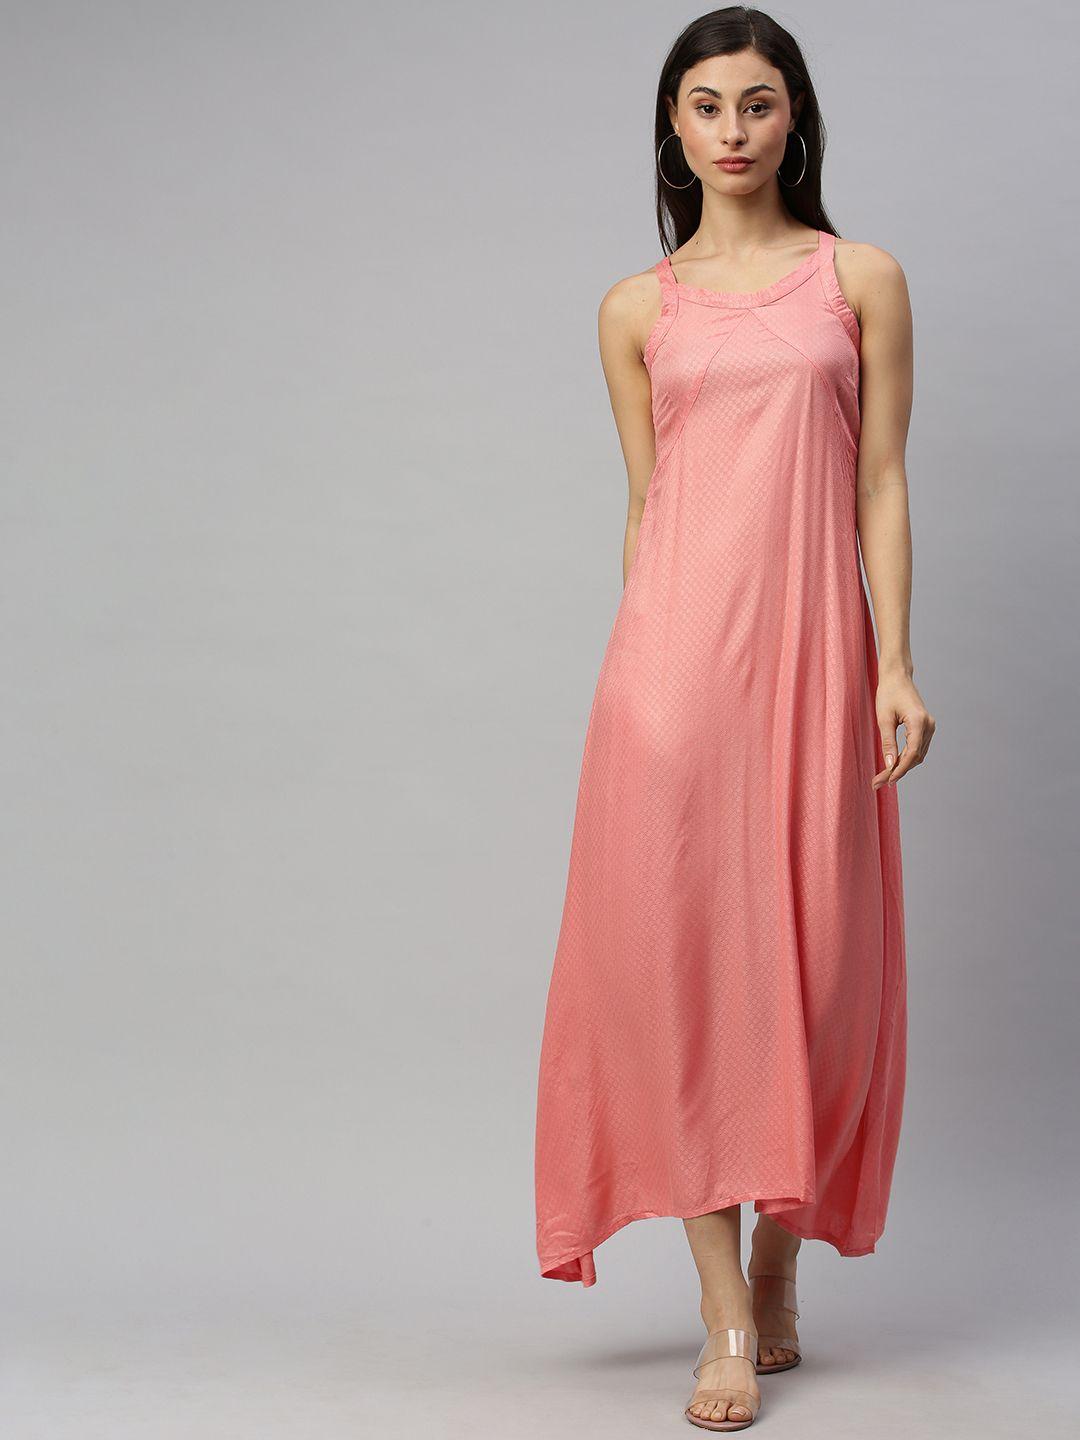 here&now women pink self design a-line dress